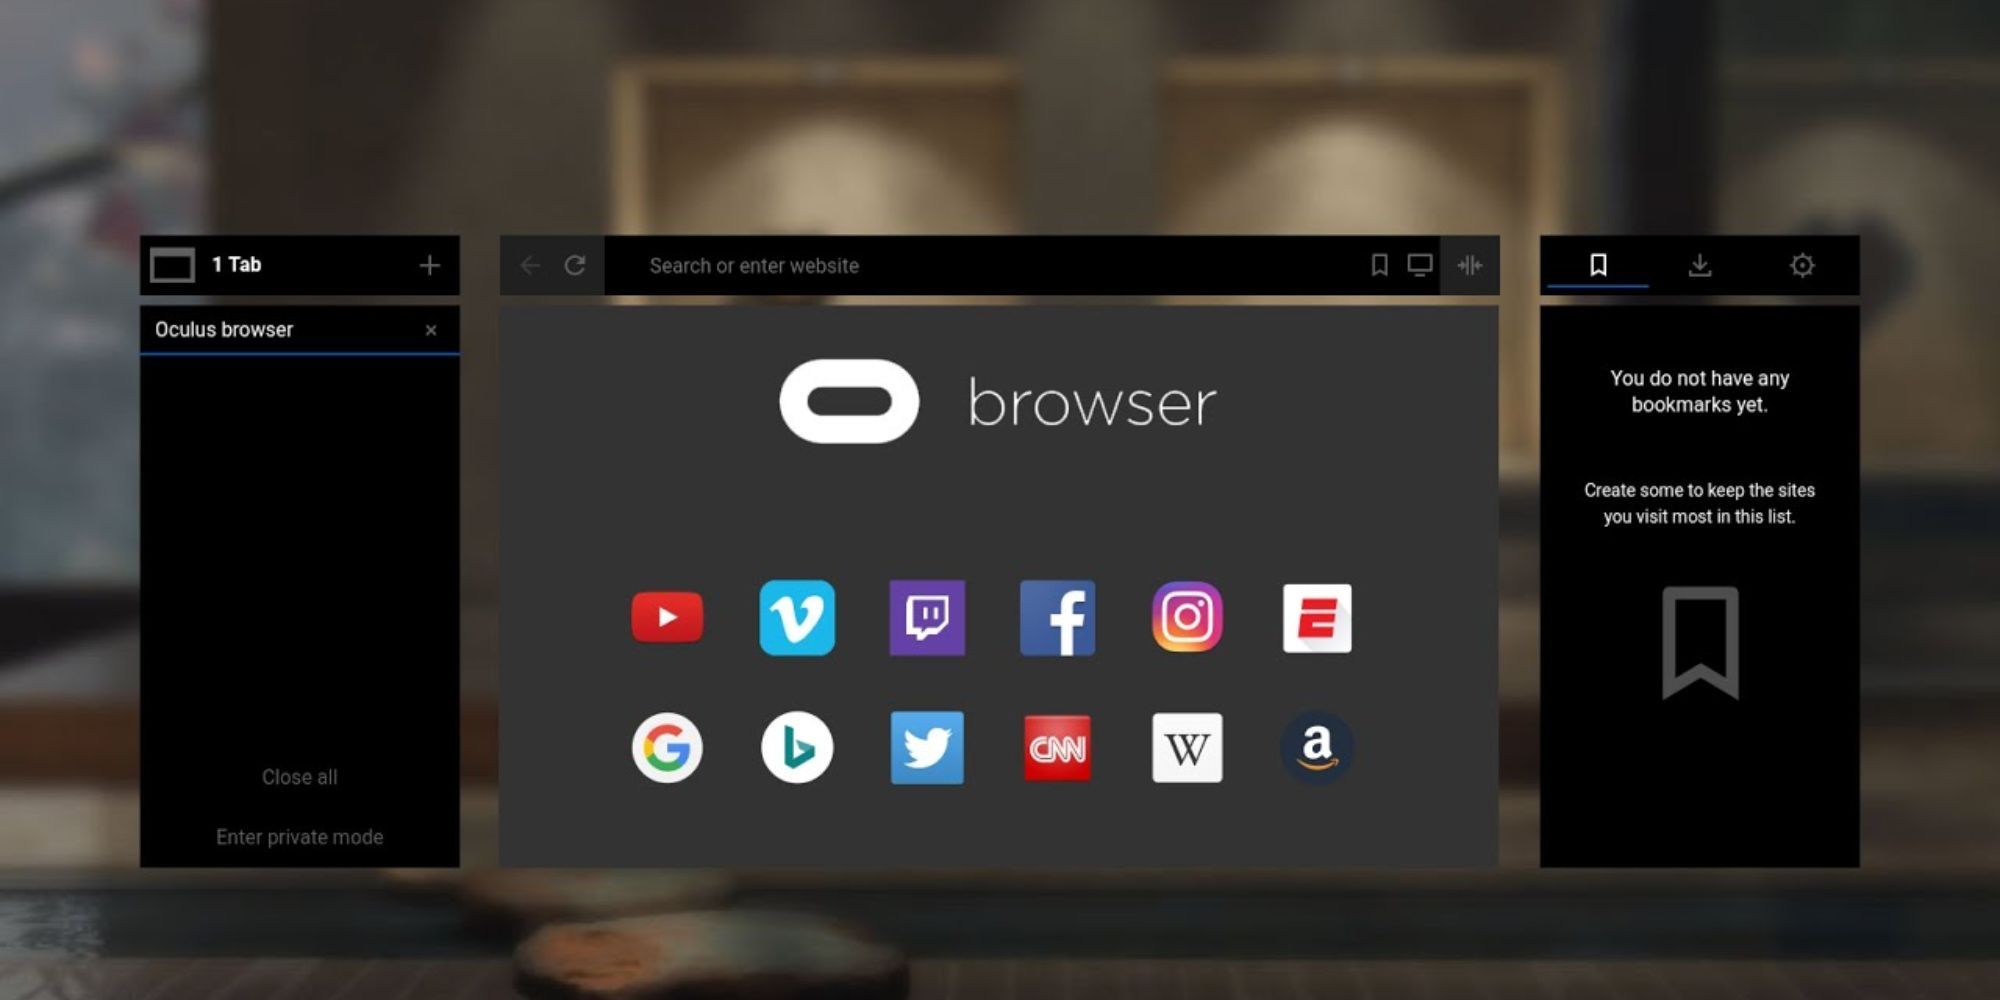 oculus_browser_homepage_screenshot